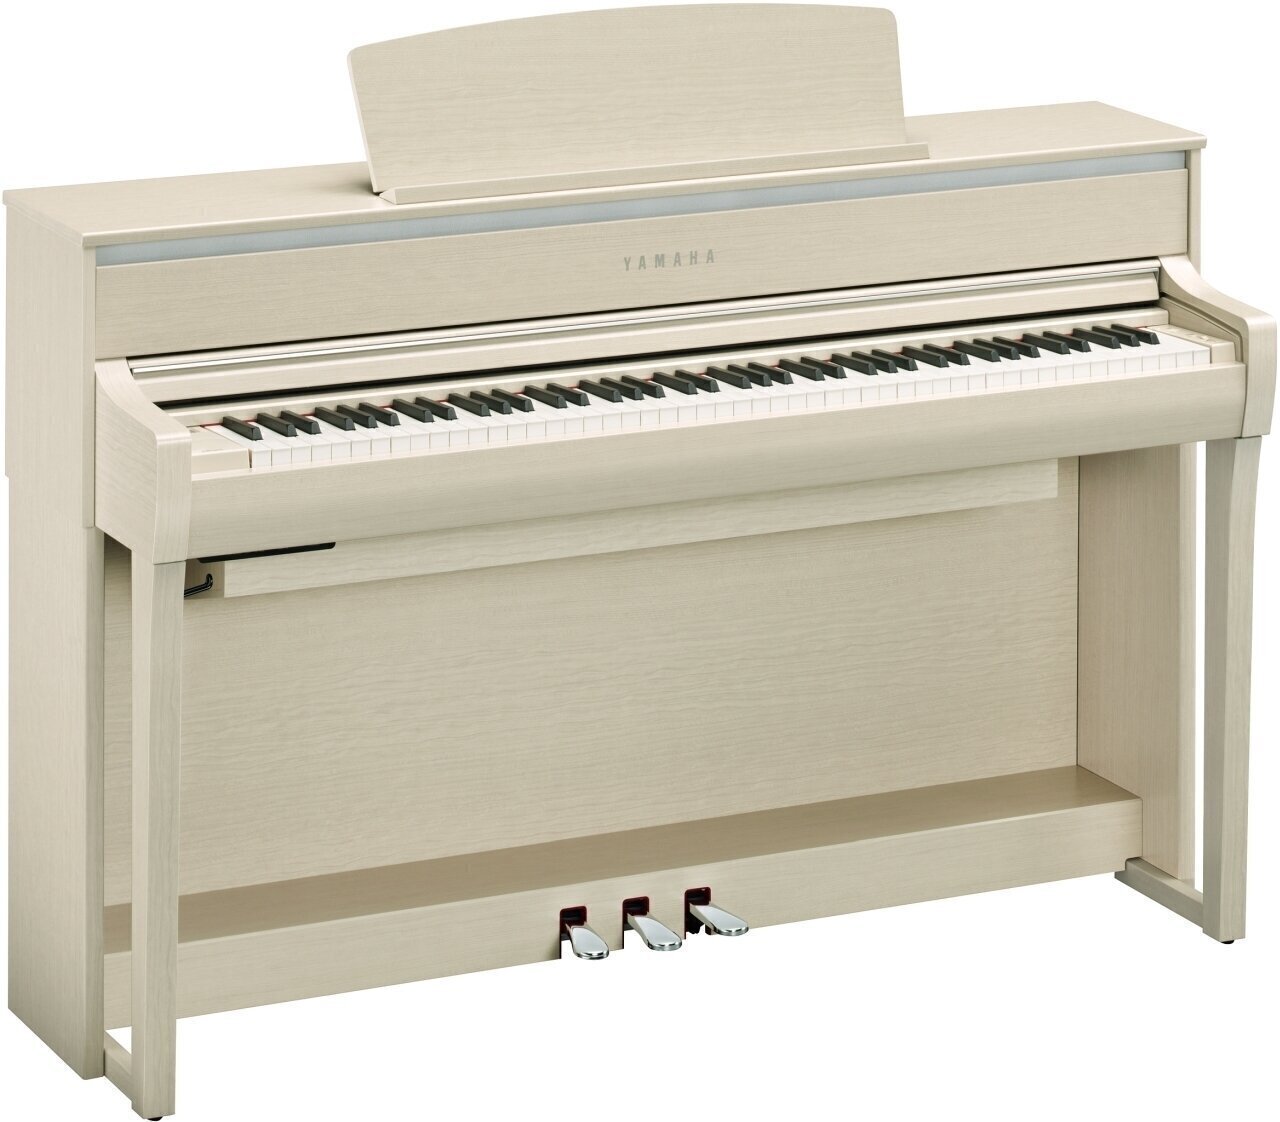 Digital Piano Yamaha CLP 775 White Ash Digital Piano